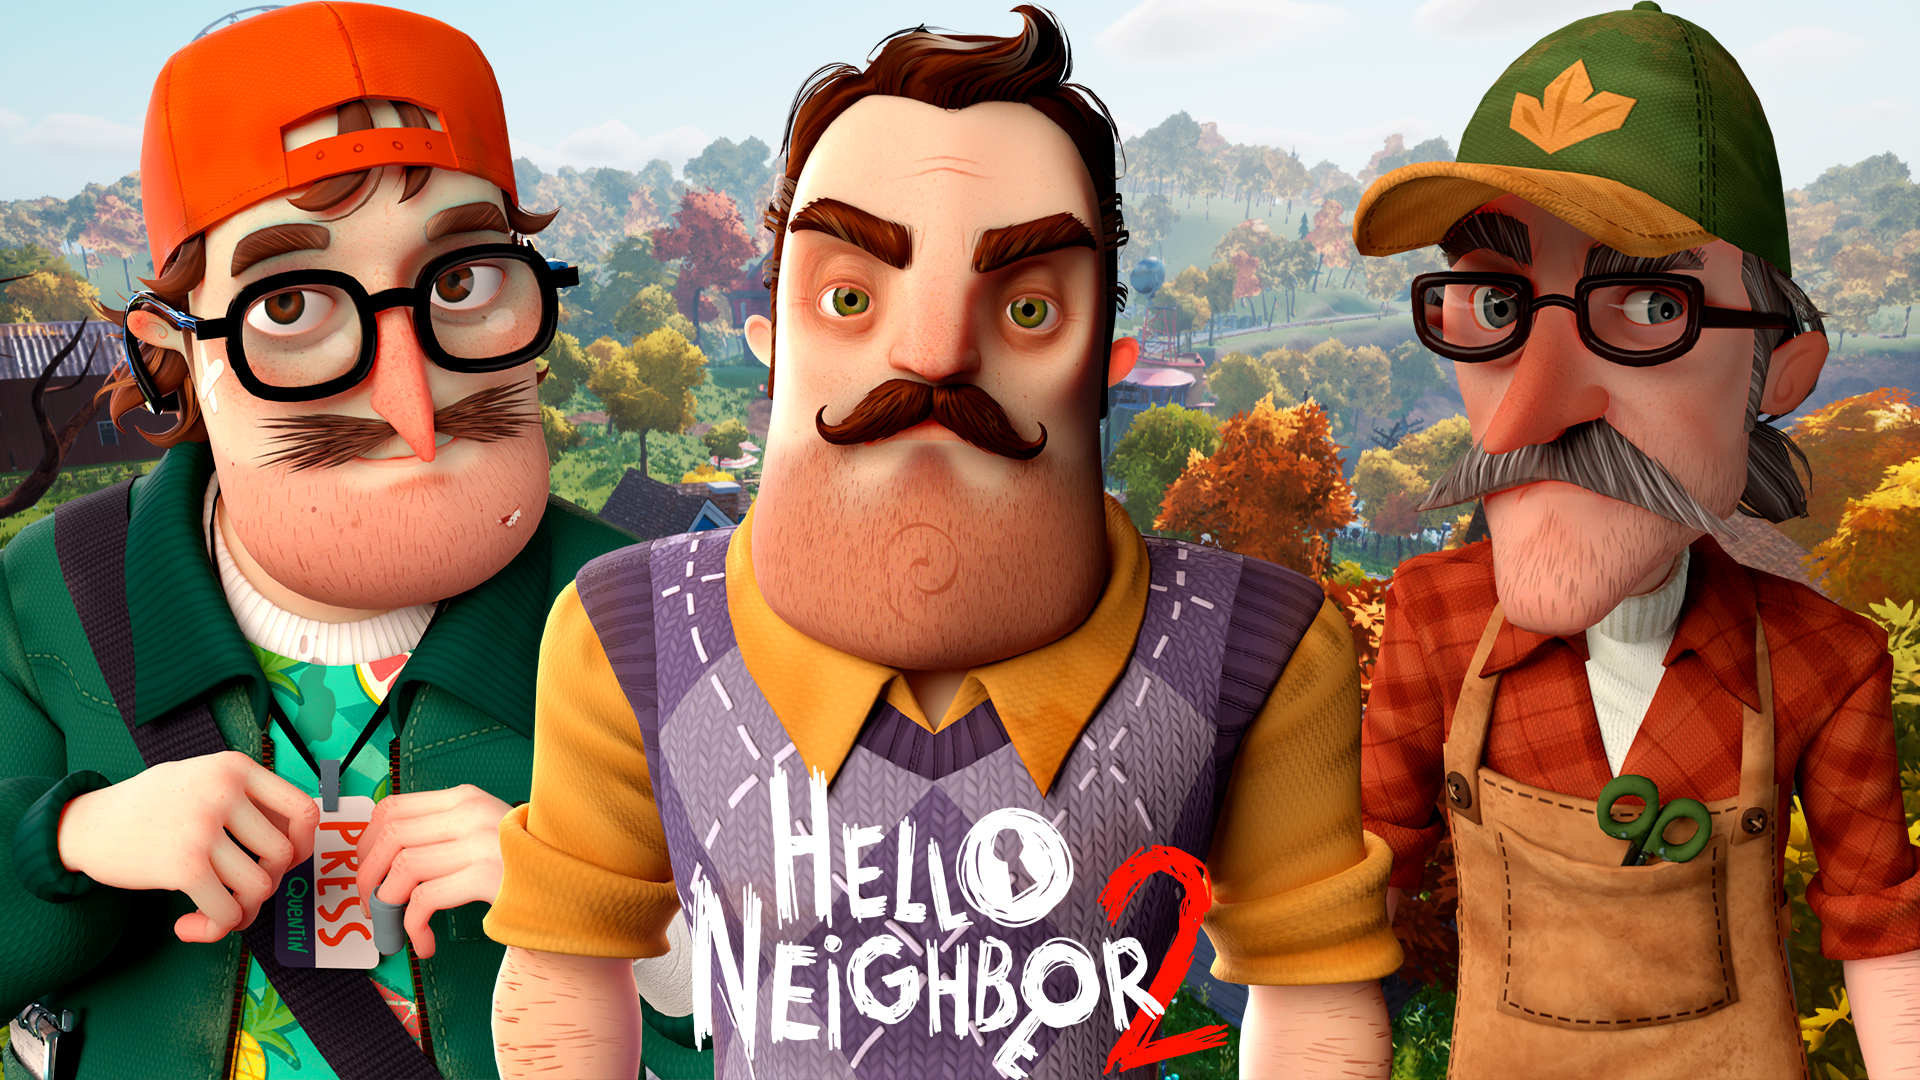 Привет сосед 2020. Hello Neighbor 2 сосед. Привет сосед 2 бета. Привет сосед 2 охотник. Привет сосед Beta 3.